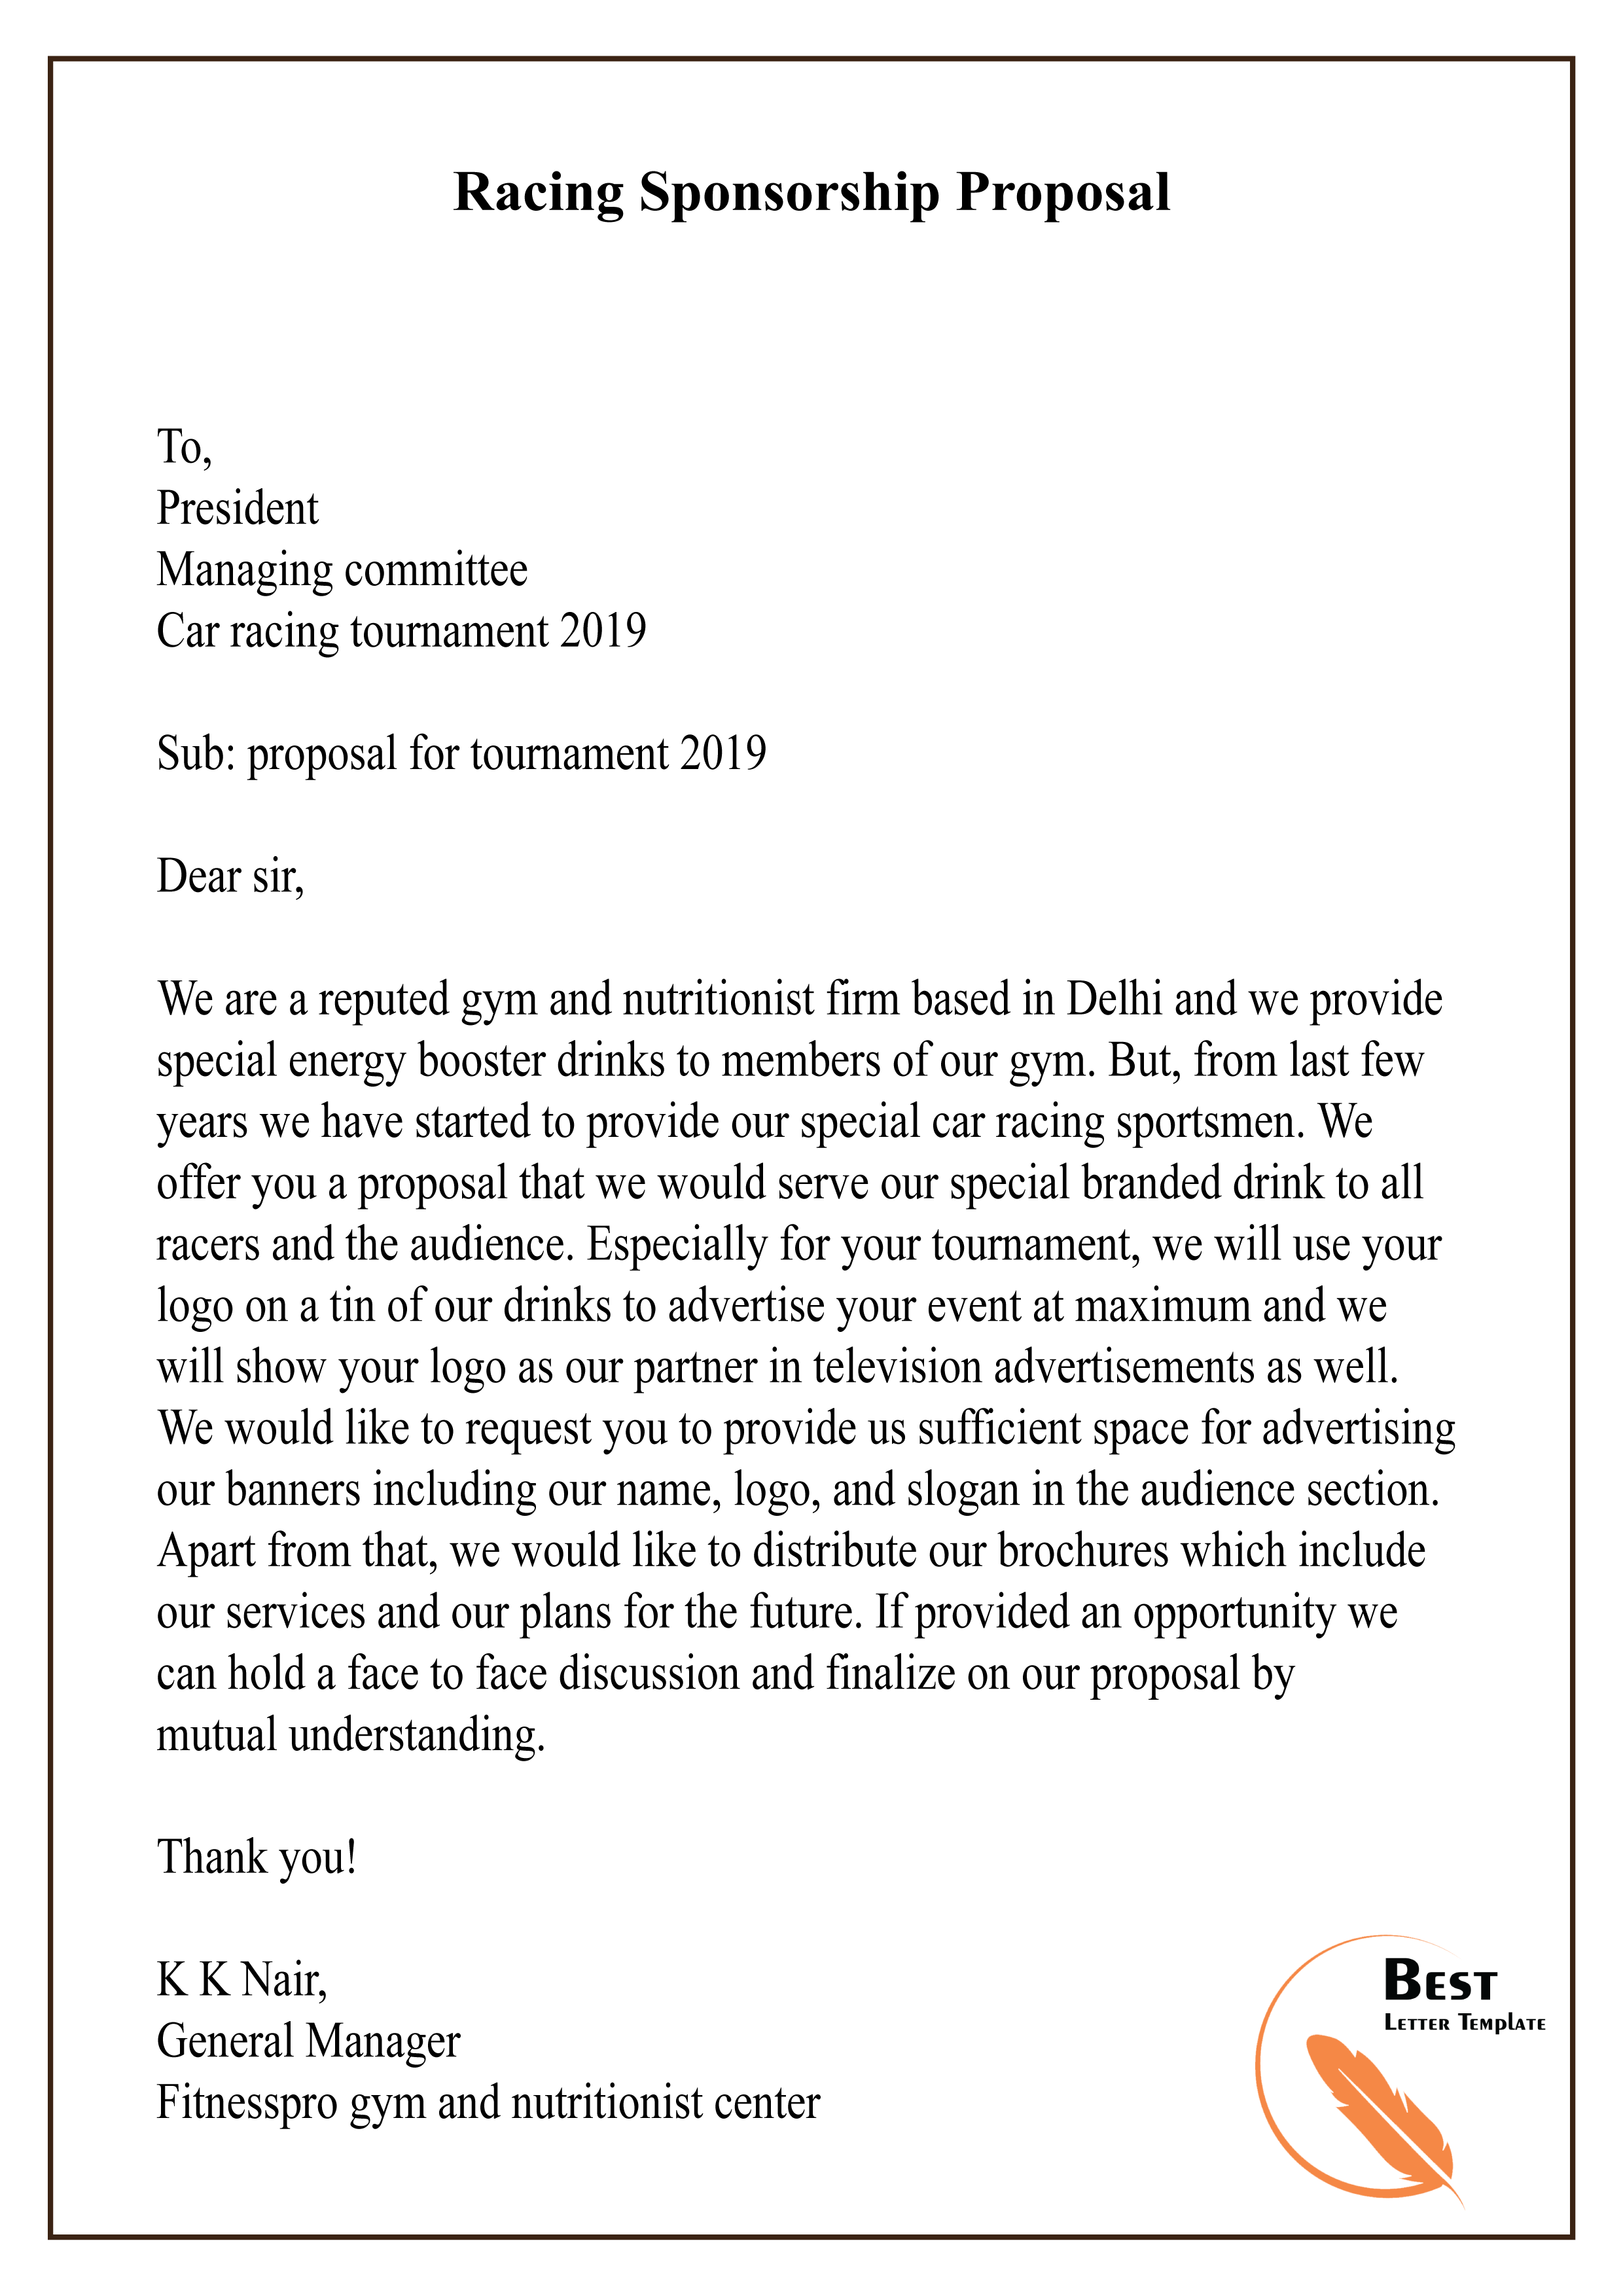 Racing Sponsorship Proposal01 Best Letter Template